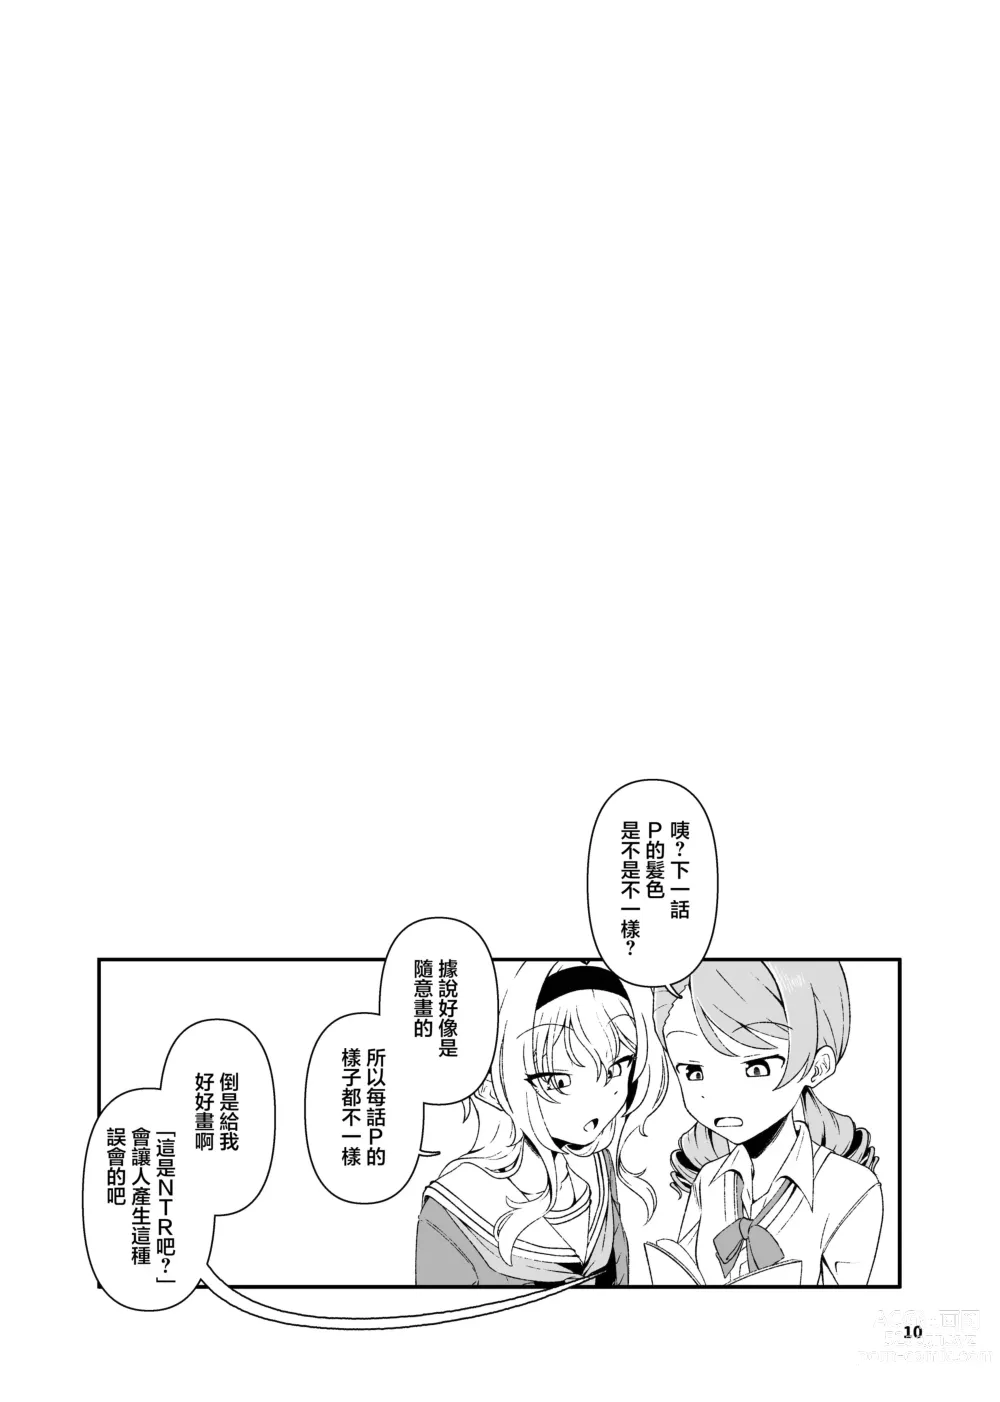 Page 11 of doujinshi 黑埼千歲黃色漫畫總編本